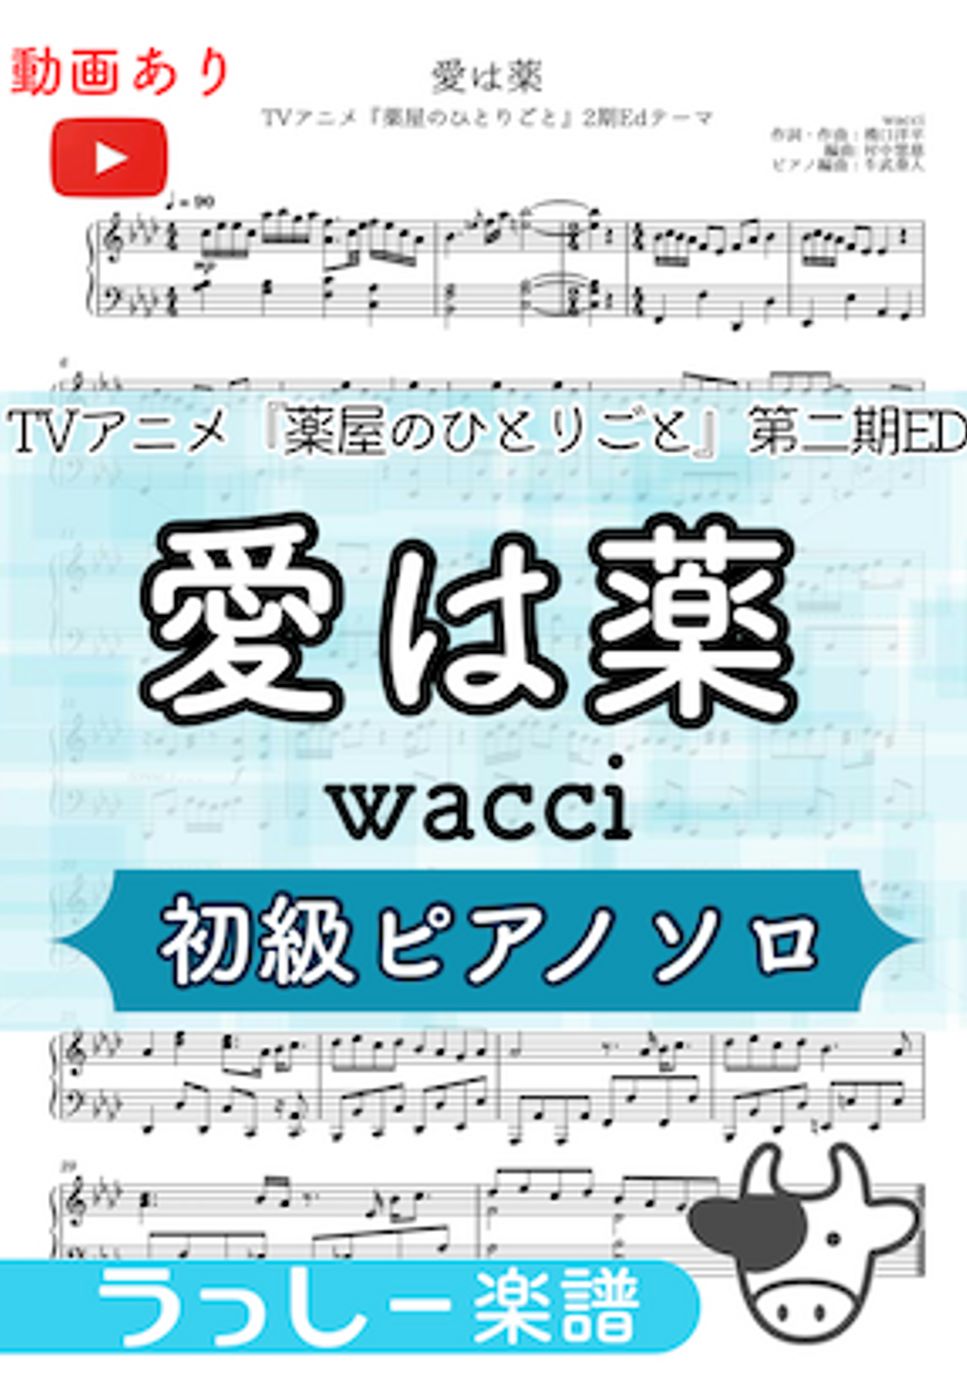 wacci - 愛は薬 (初級ソロ) by 牛武奏人